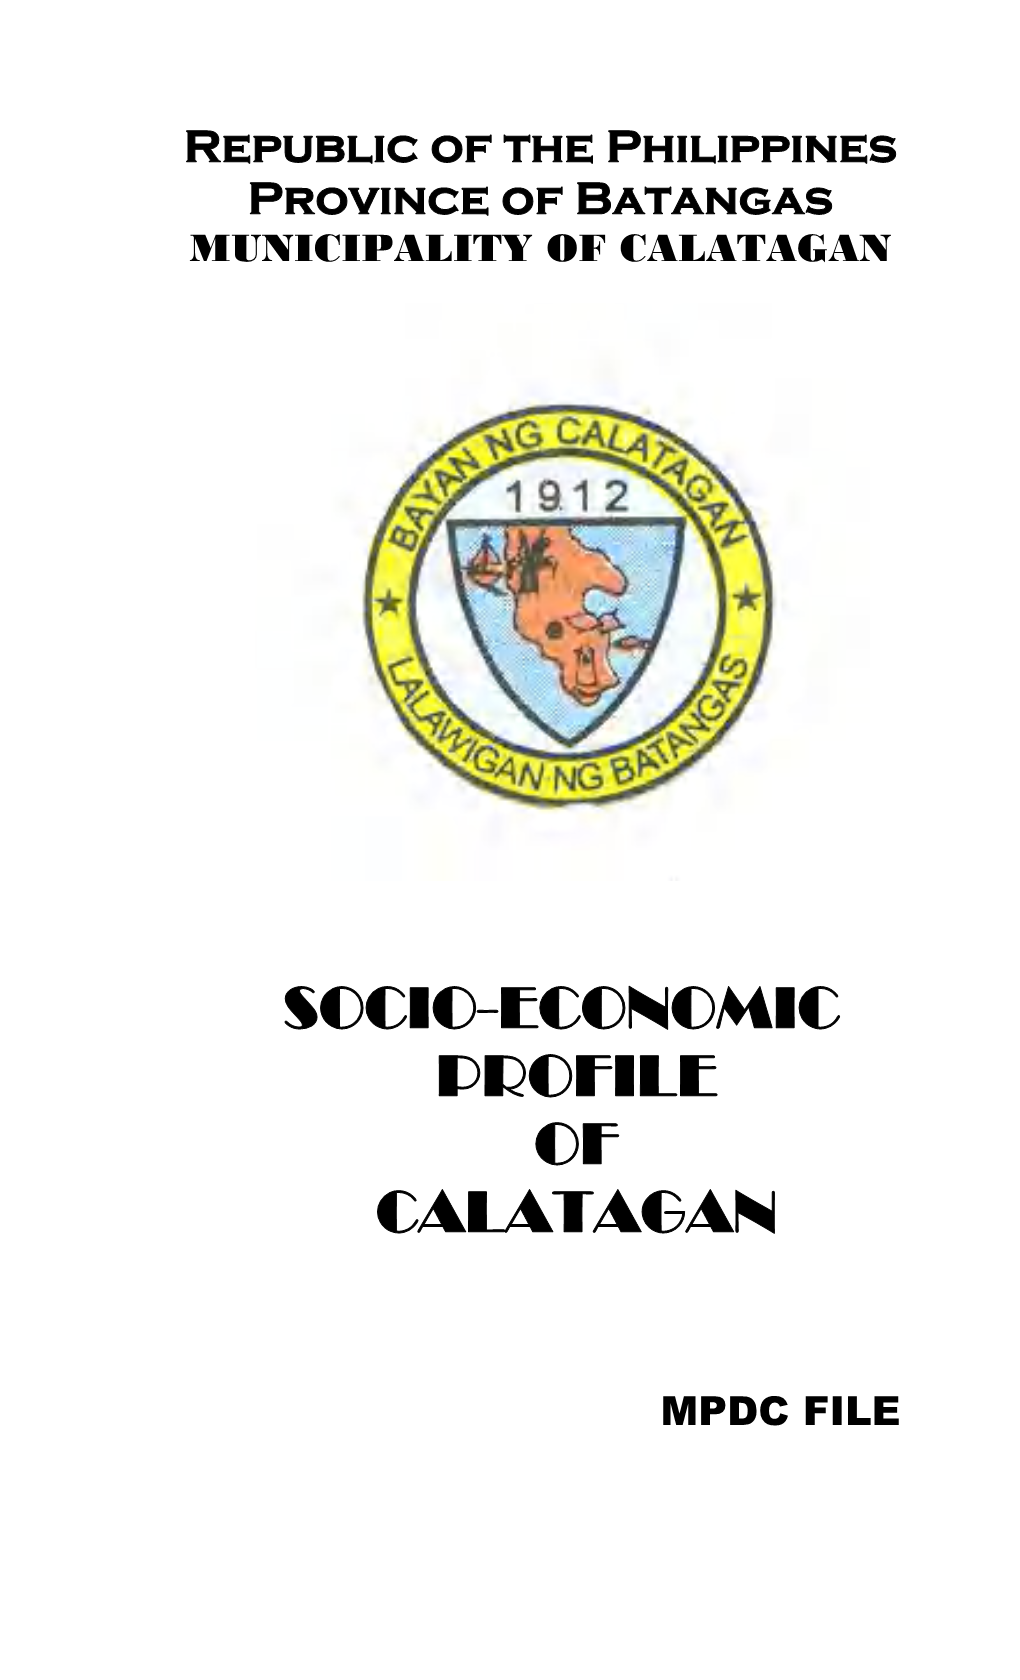 Socio-Economic Profile of Calatagan